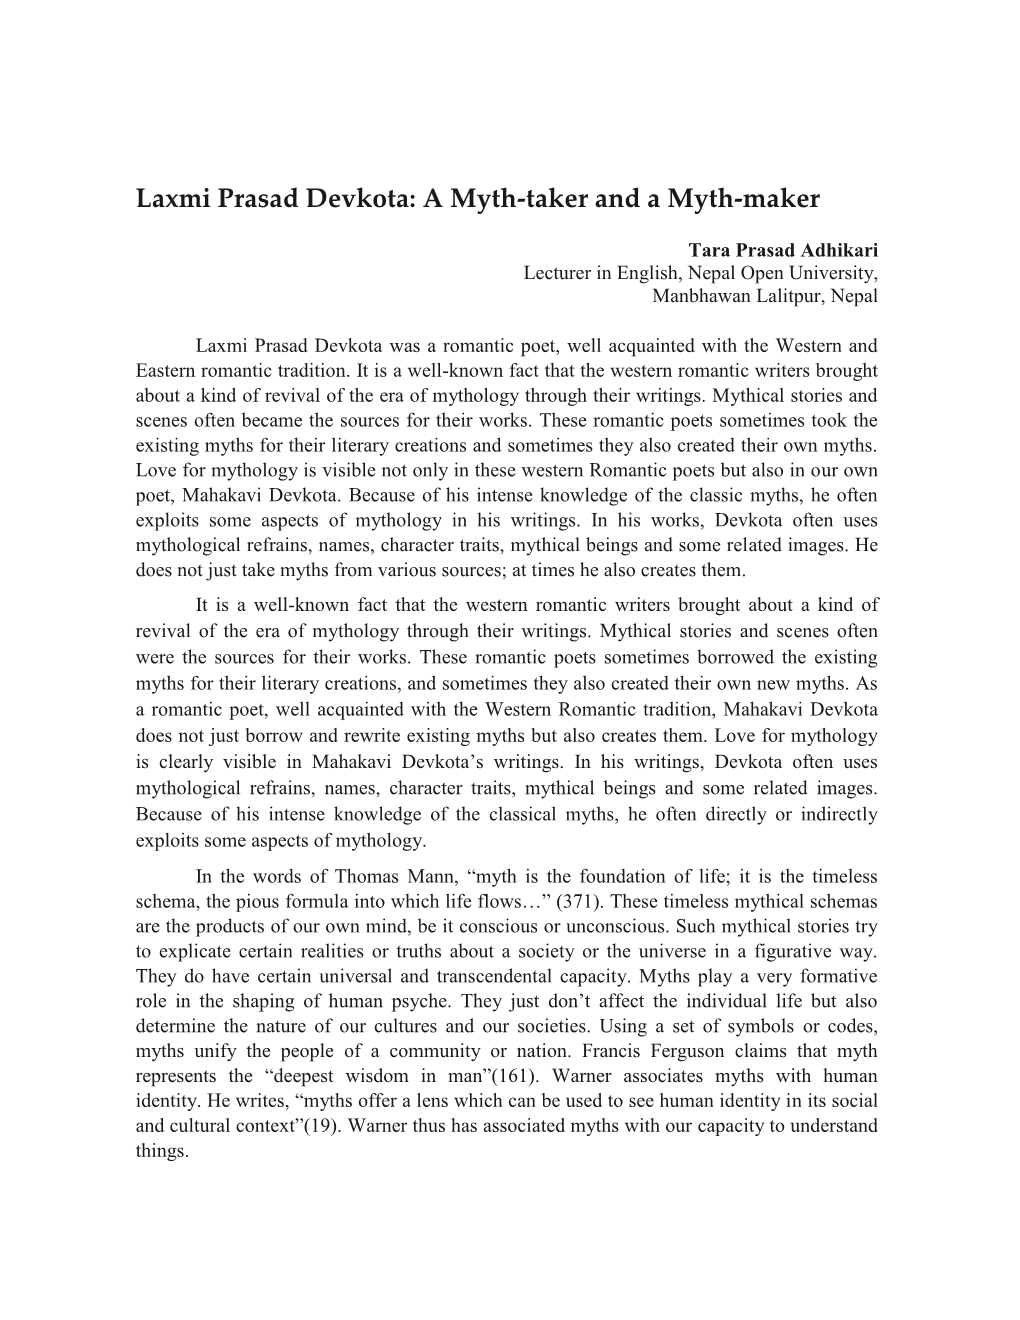 Laxmi Prasad Devkota: a Myth-Taker and a Myth-Maker